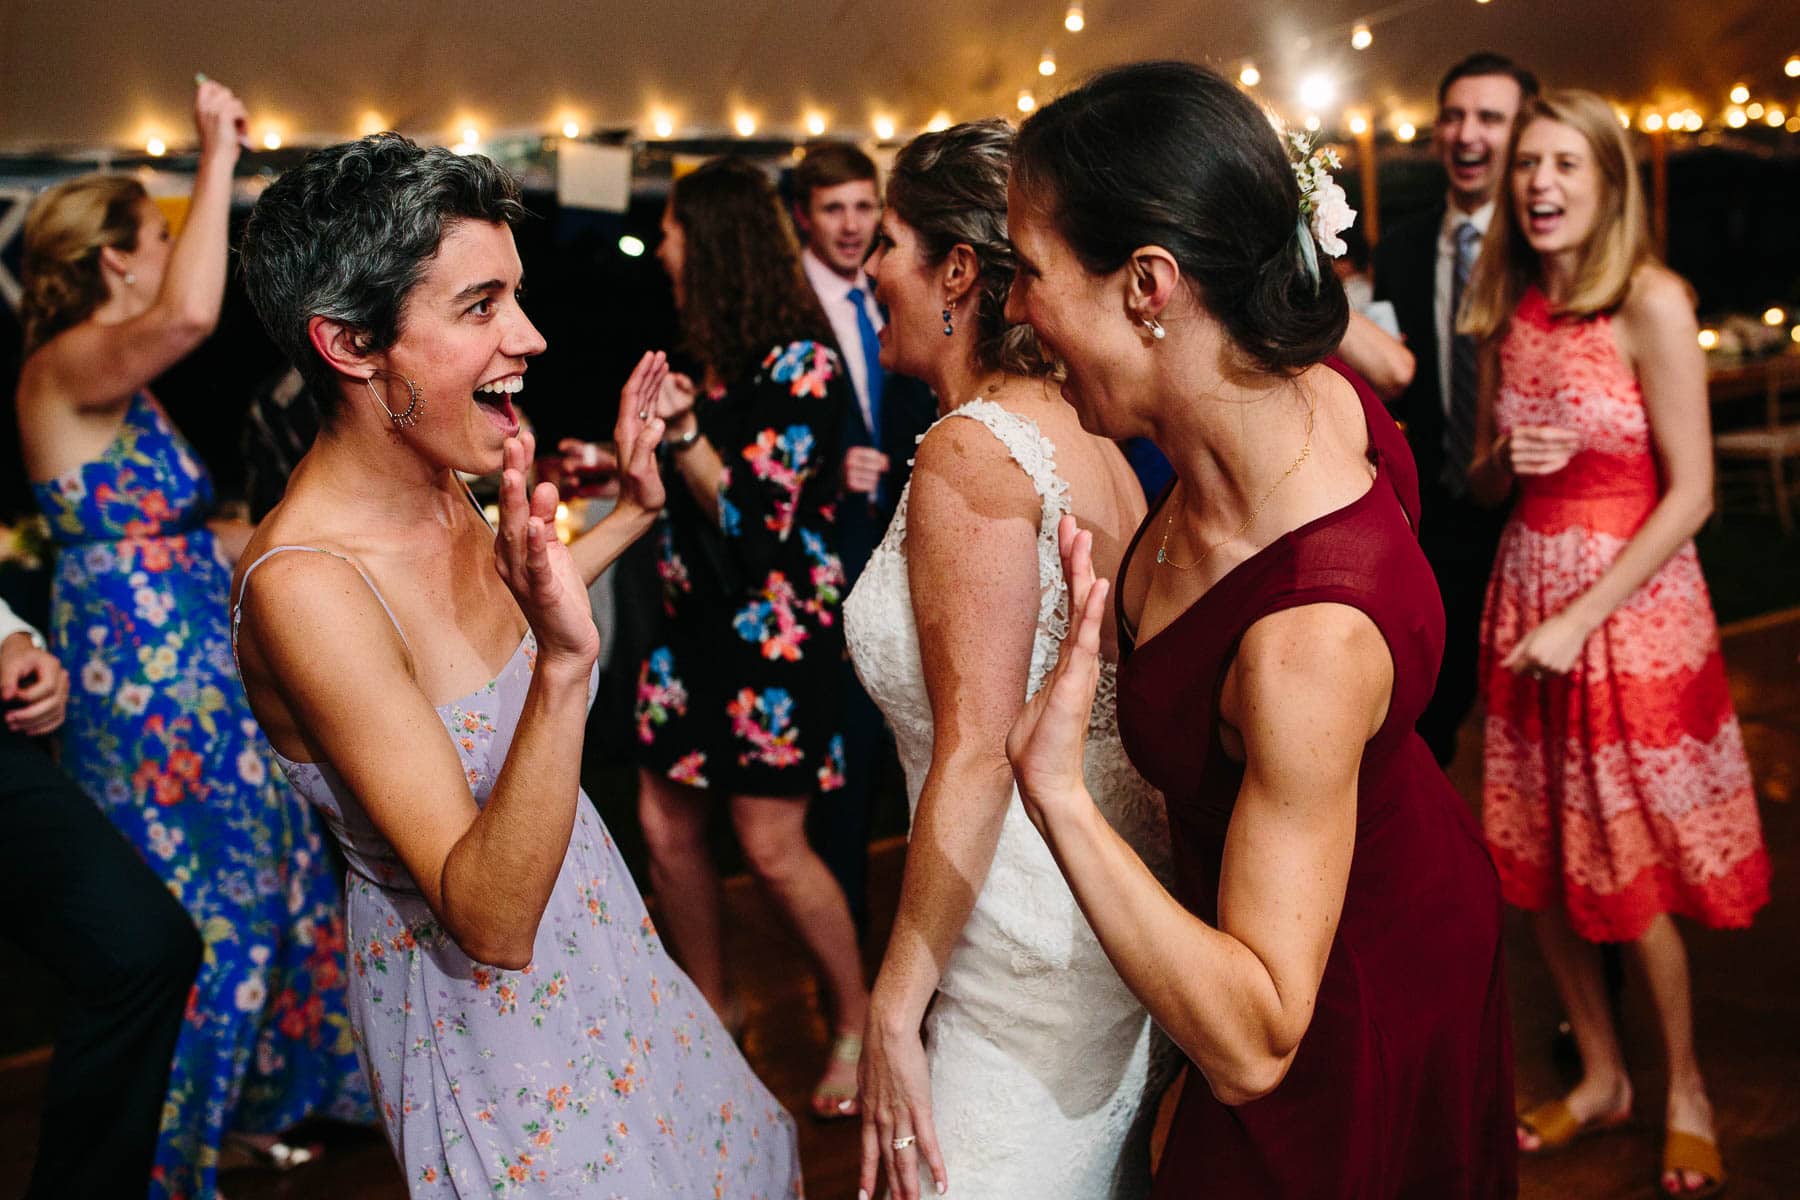 Tabor Academy wedding of Emily and Alex in Marion, MA | Kelly Benvenuto Photography | Boston Wedding Photographer